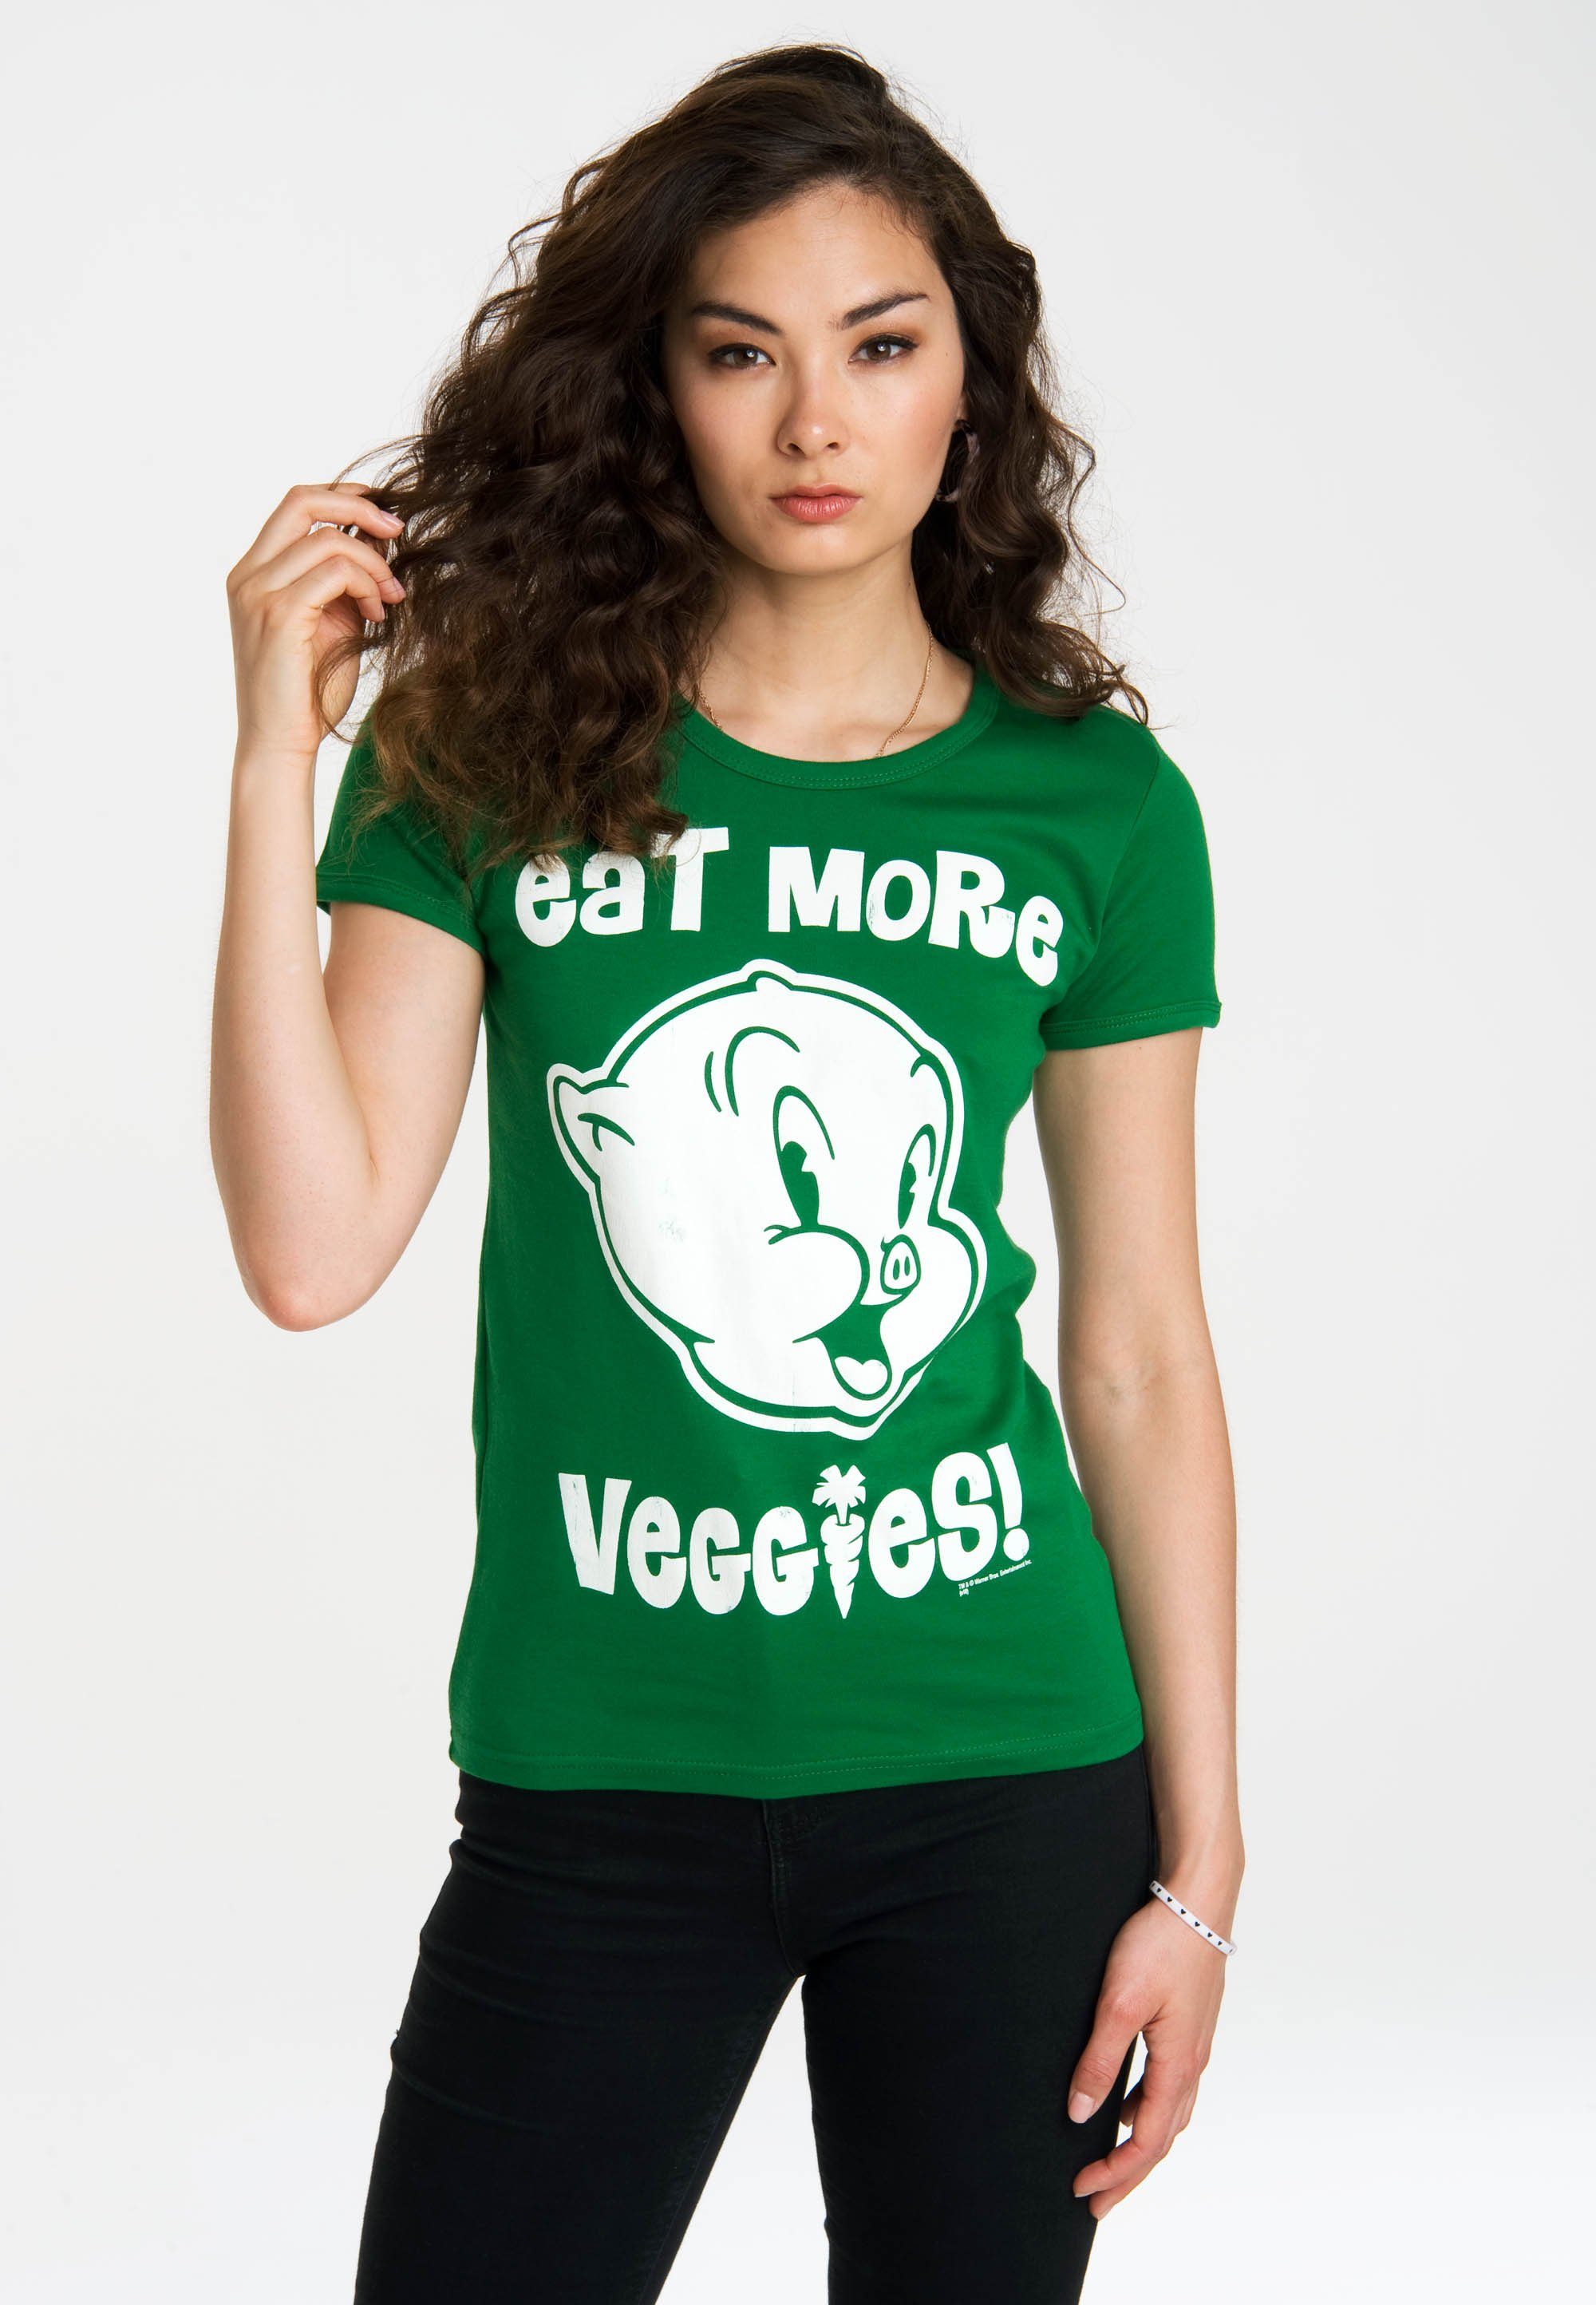 LOGOSHIRT T-Shirt Looney Tunes - Eat More lizenzierten Originaldesign mit Veggies